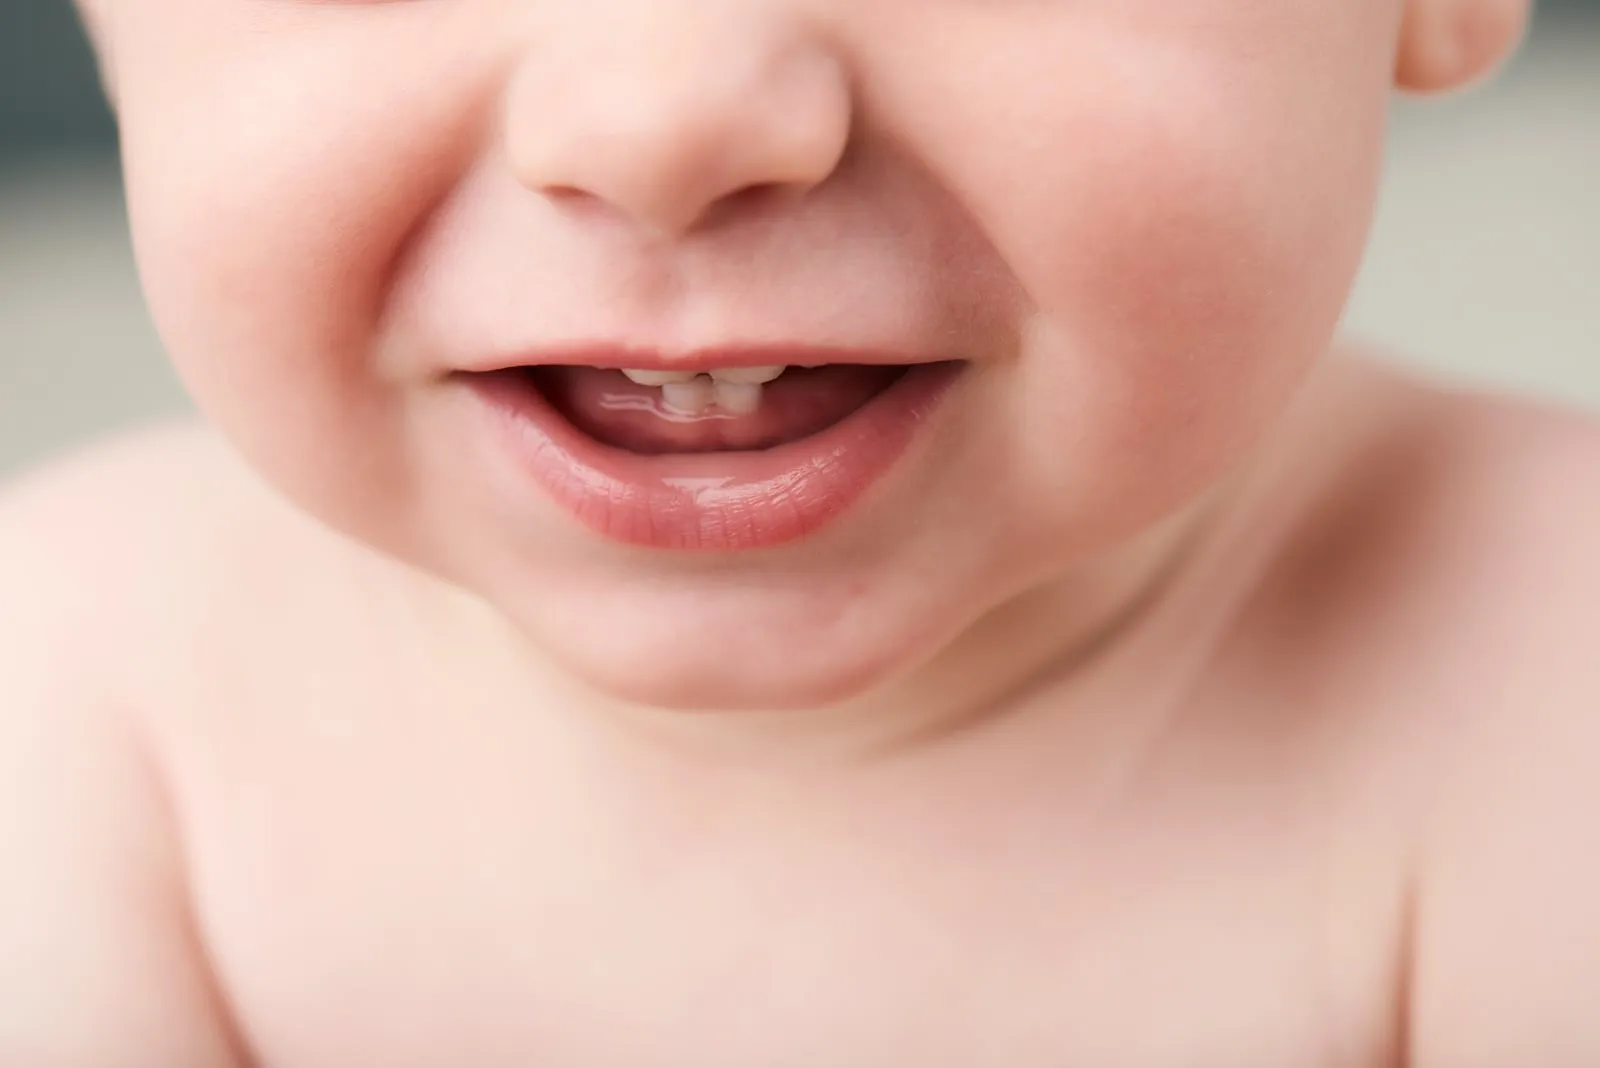 baby born with teeth